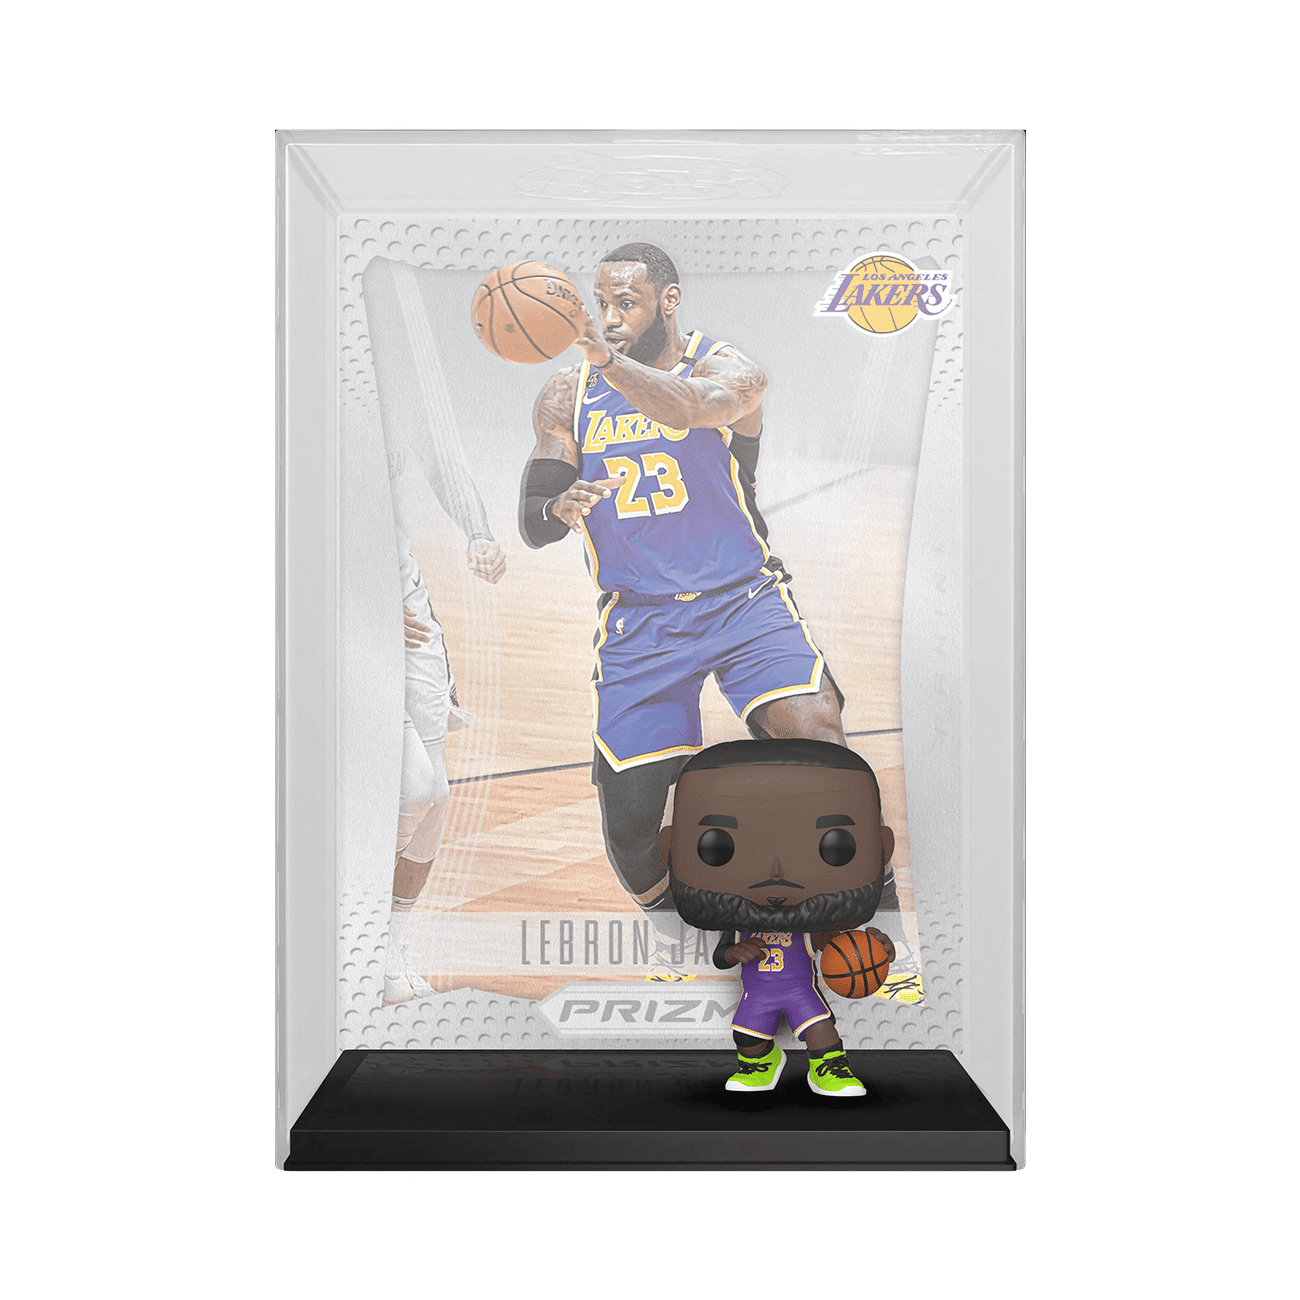 Funko Pop! Trading Cards | NBA: LeBron James